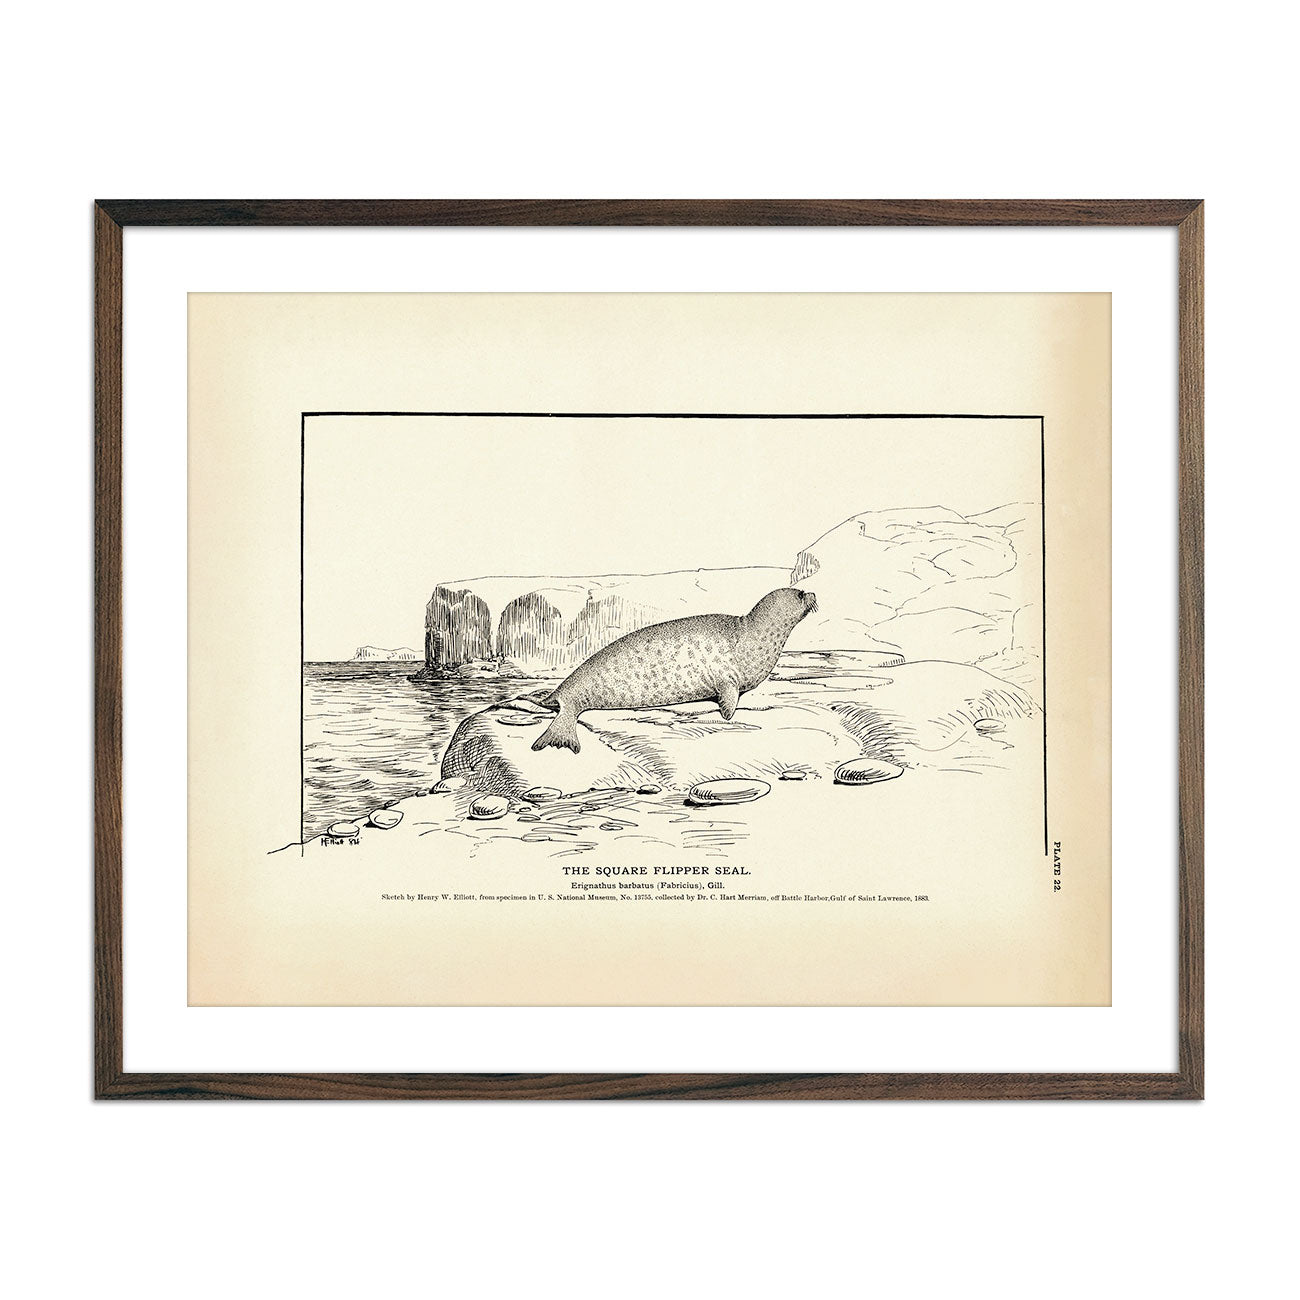 Vintage Square Flipper Seal fish print